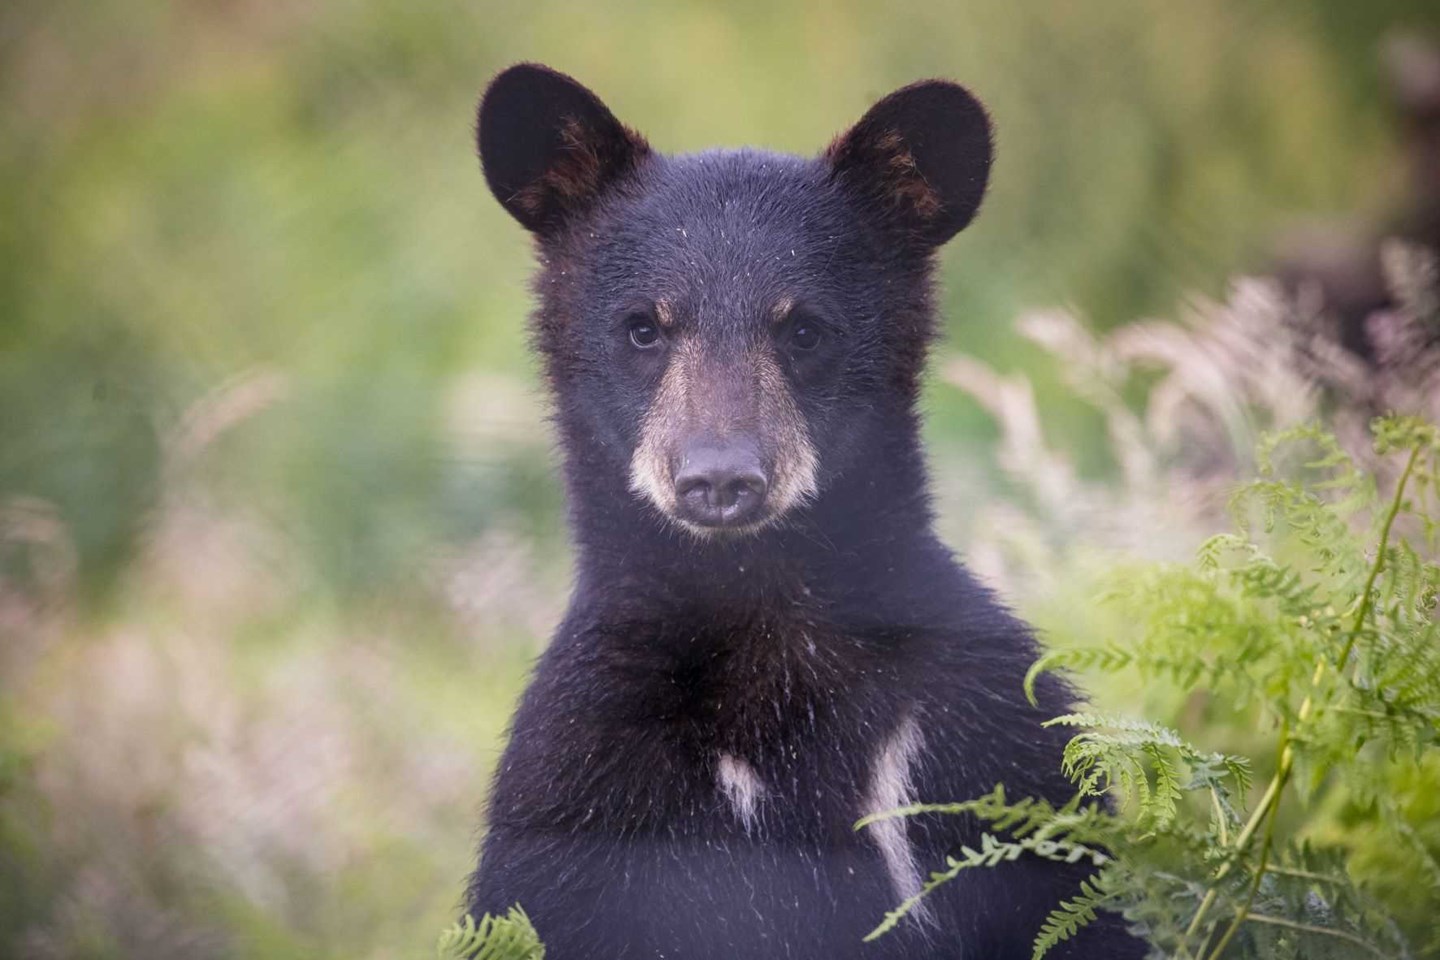 Close up image of bear peeking out behind bushes 